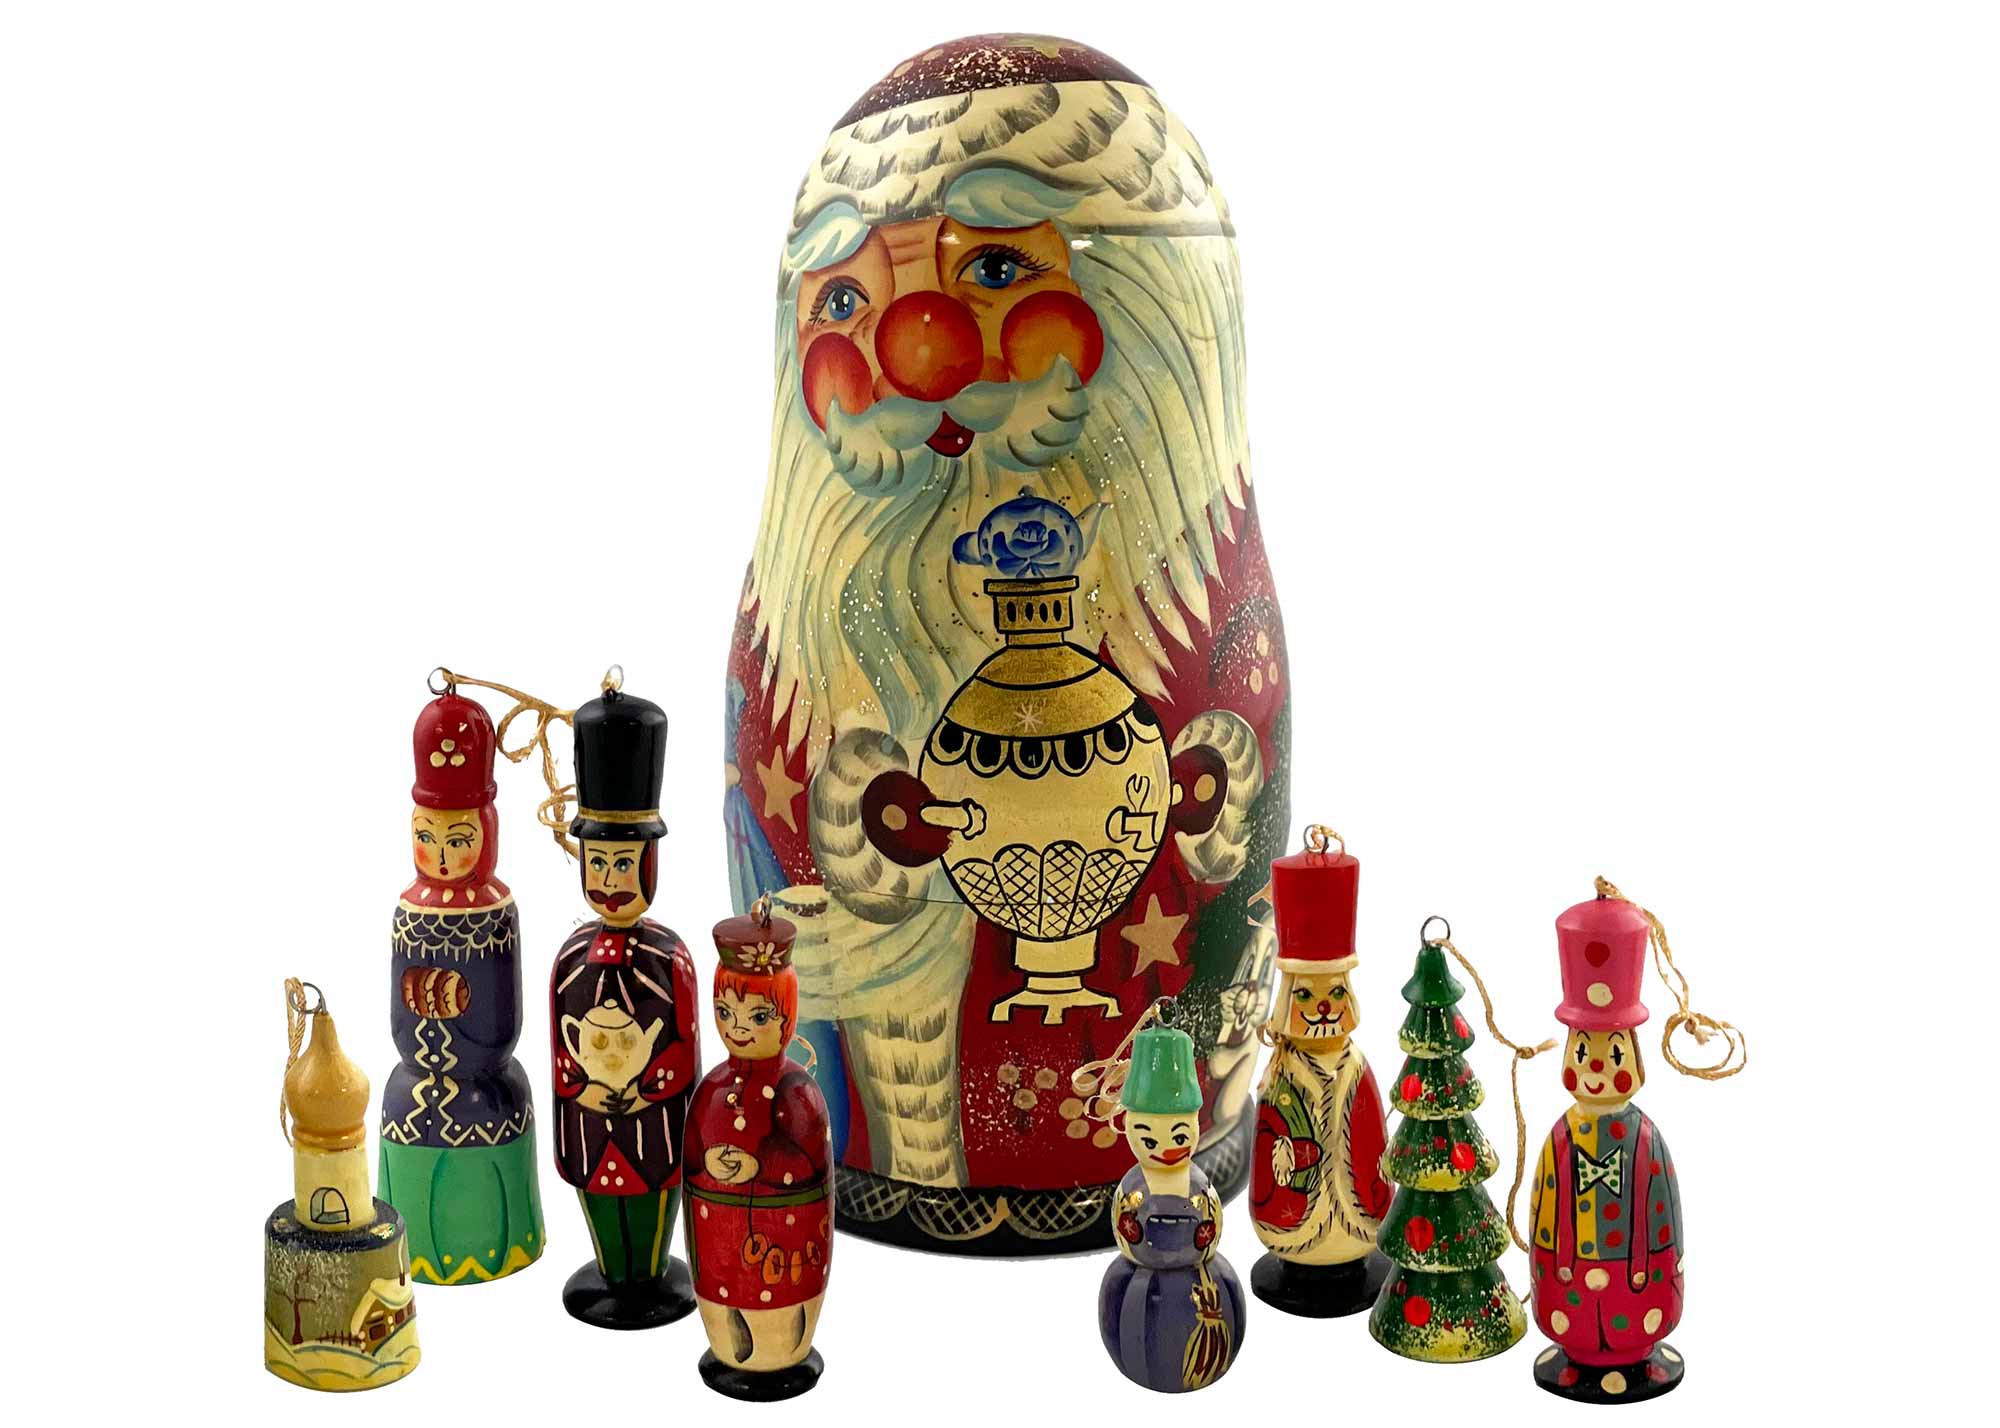 Buy Vintage Santa Nesting Doll with Ornaments Inside 9" at GoldenCockerel.com